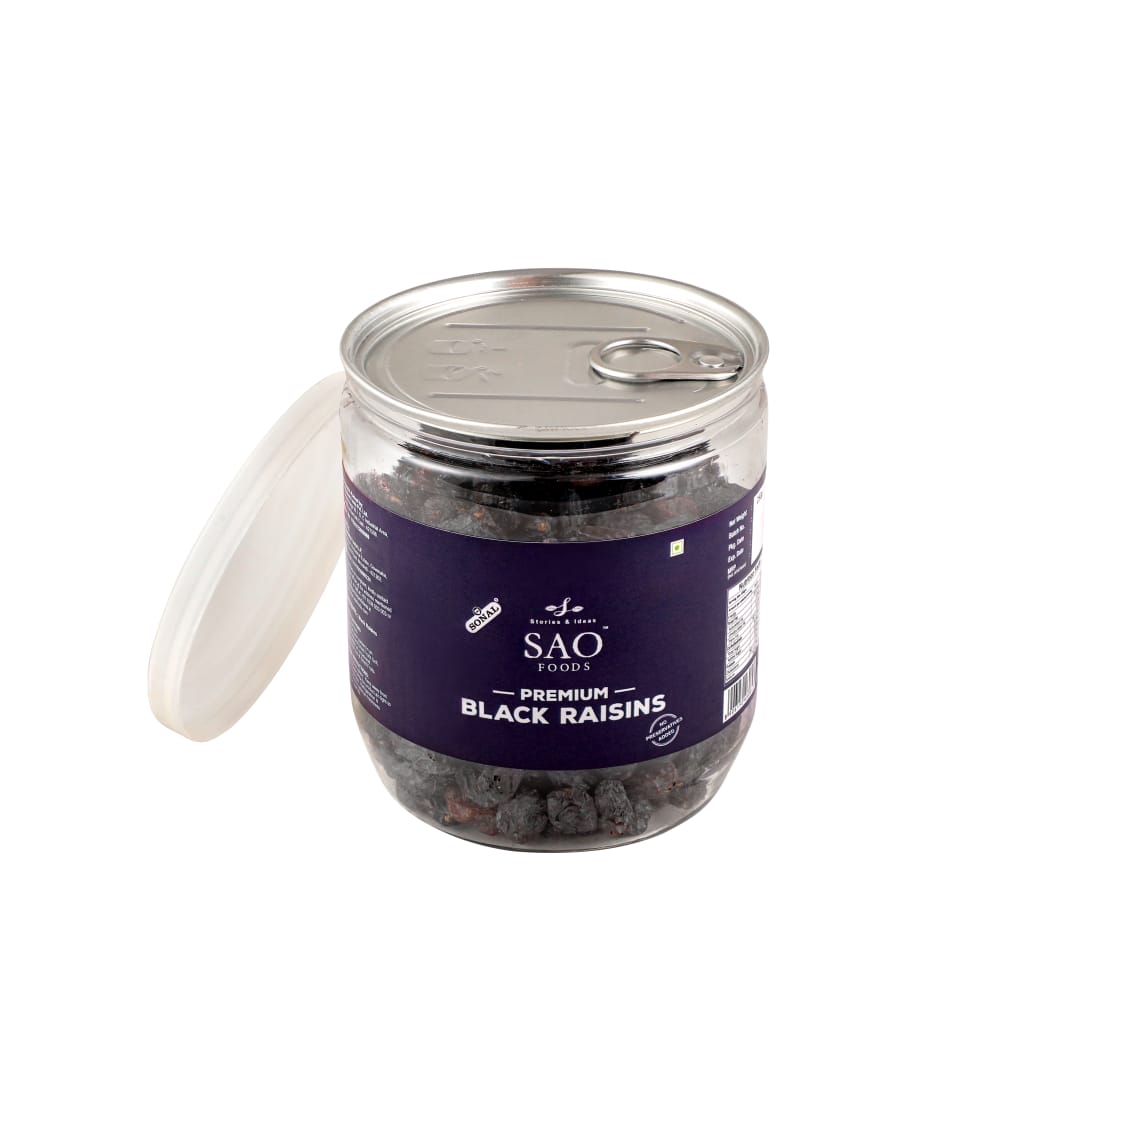 SAO FOODS Black Raisins 250 gm | PET Jar with Aluminum cap